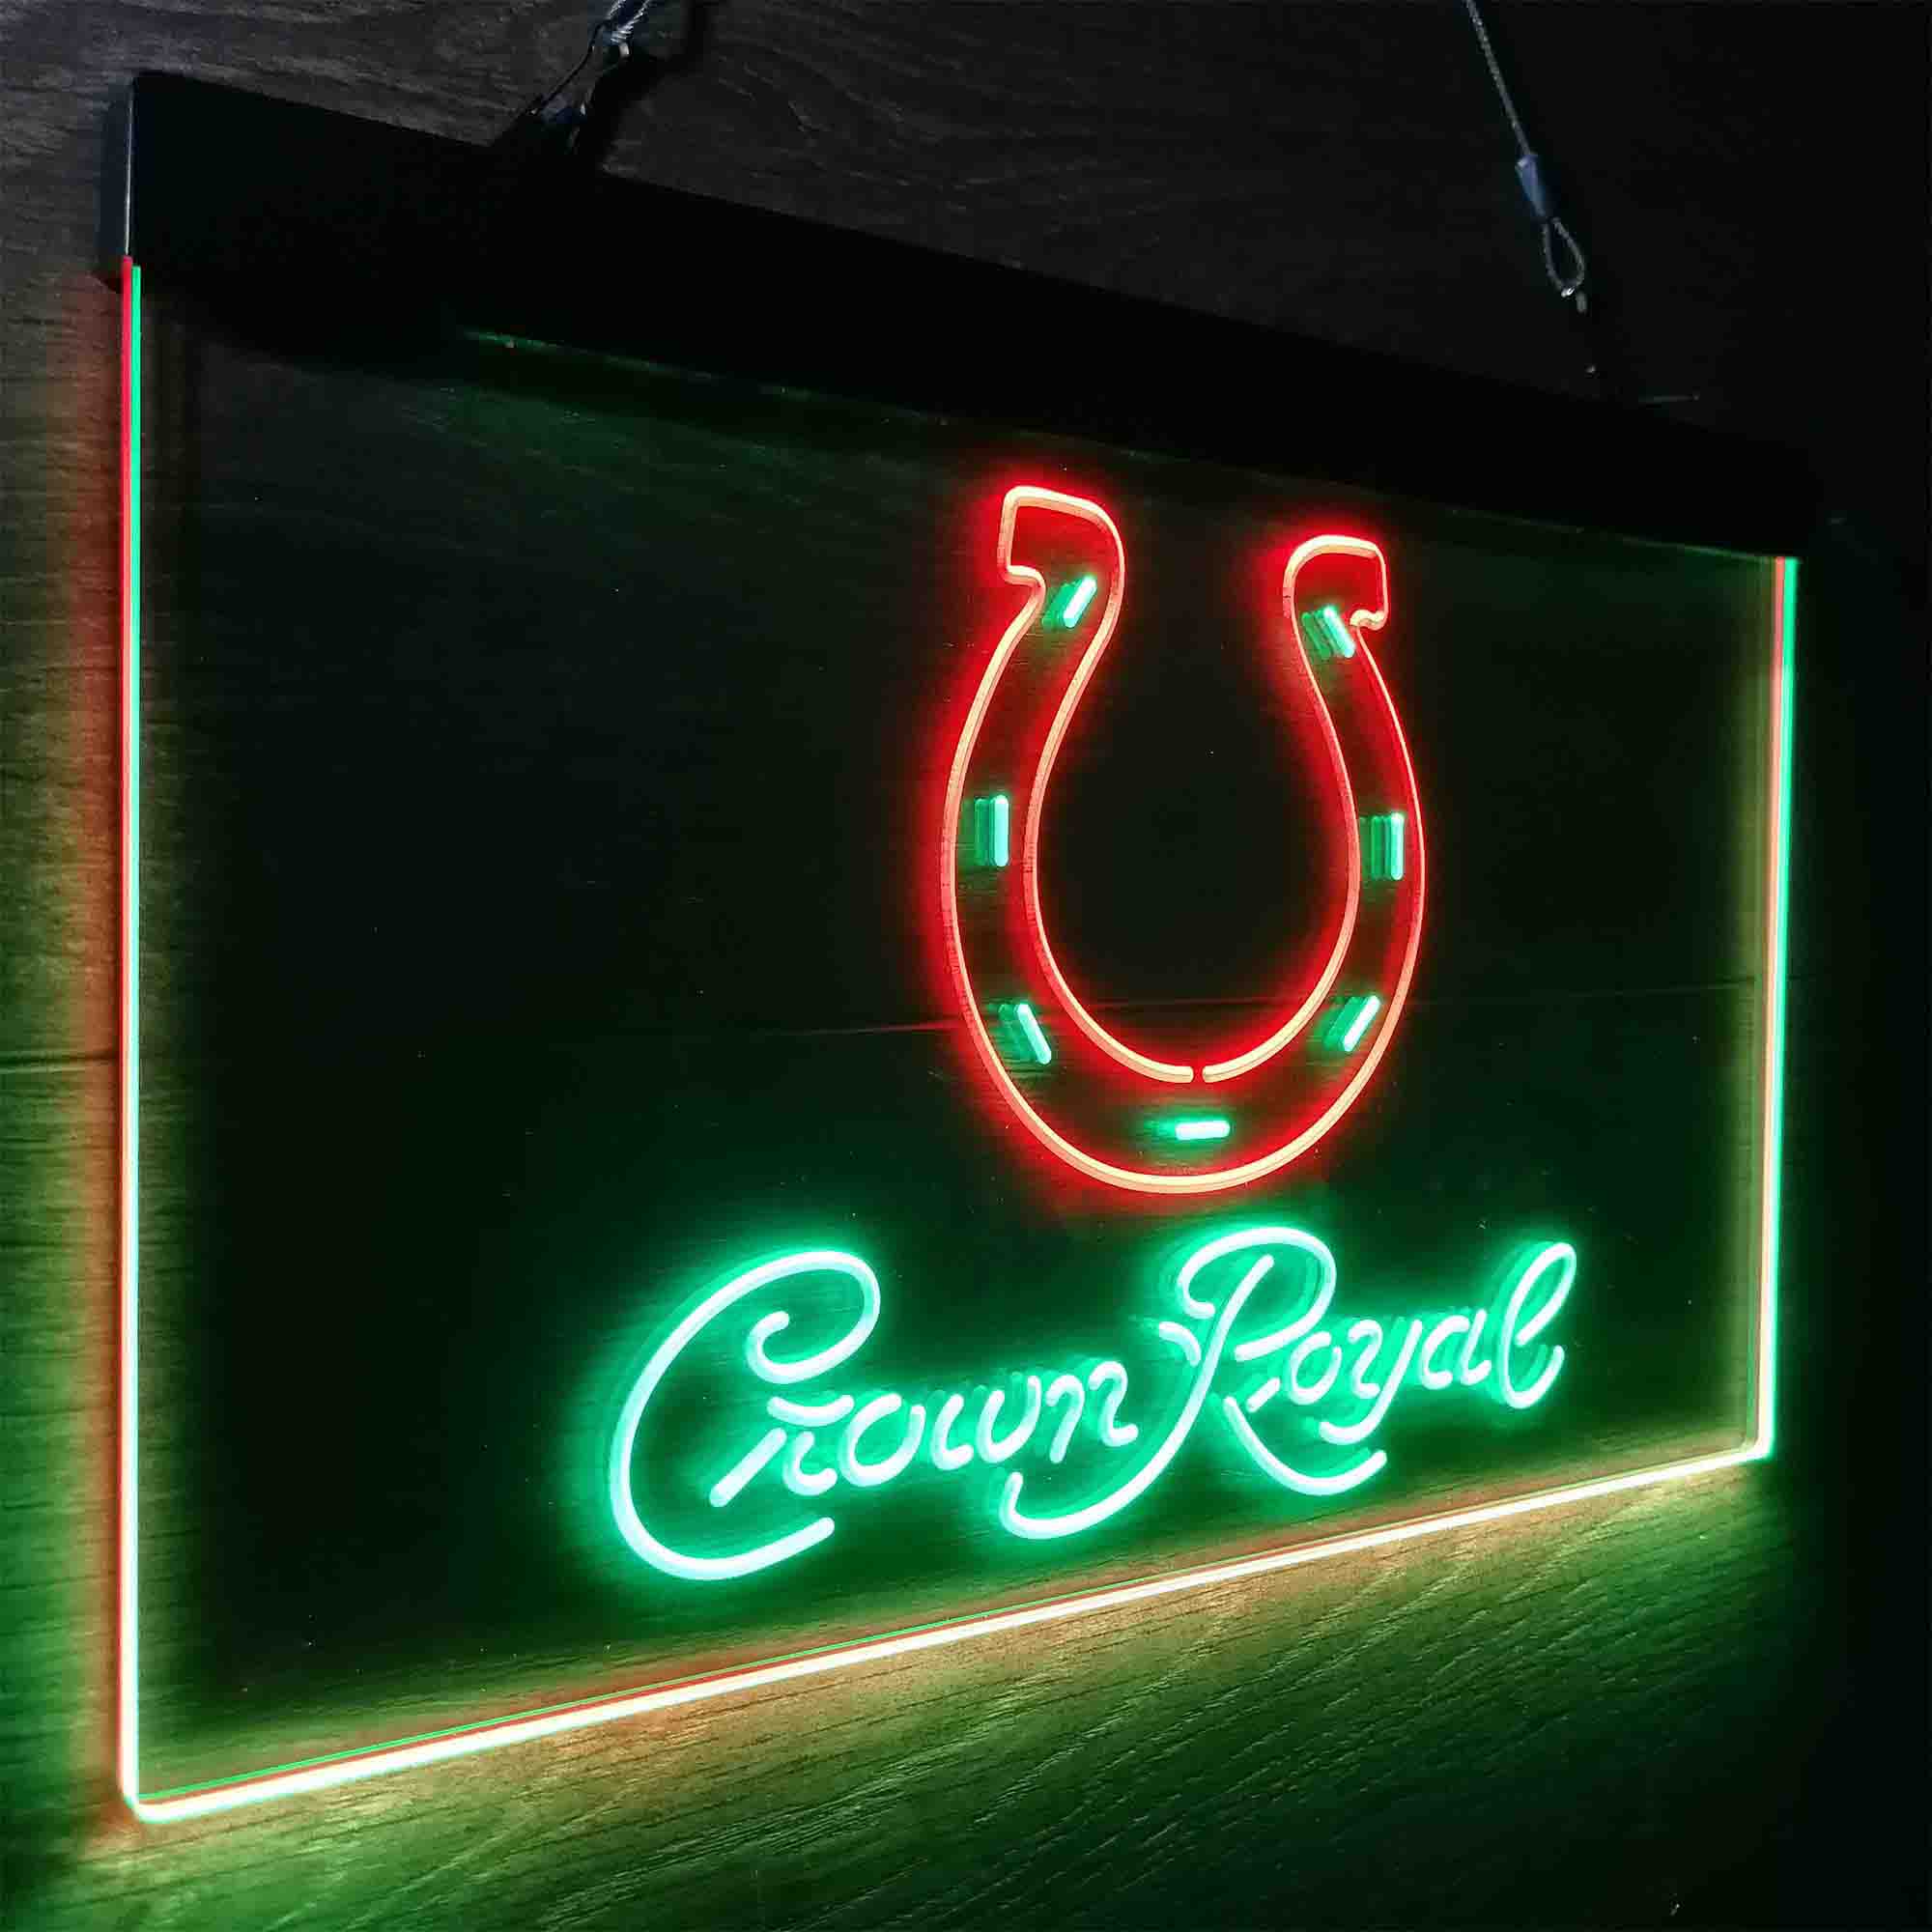 Crown Royal Bar Indianapolis Colts Est. 1953 LED Neon Sign